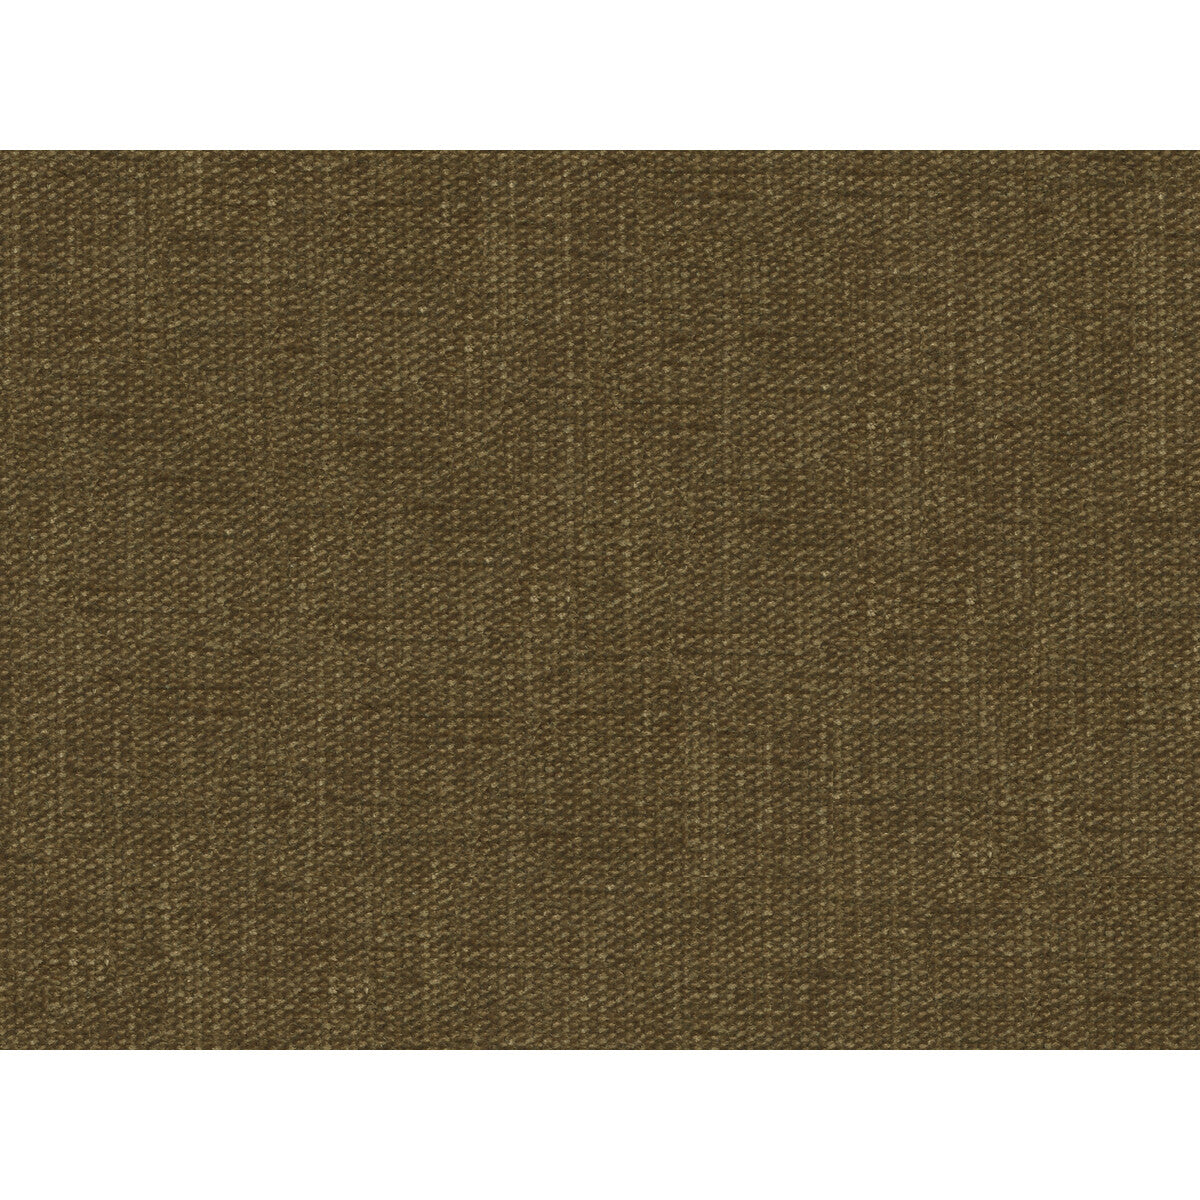 Kravet Smart fabric in 34959-106 color - pattern 34959.106.0 - by Kravet Smart in the Performance Kravetarmor collection